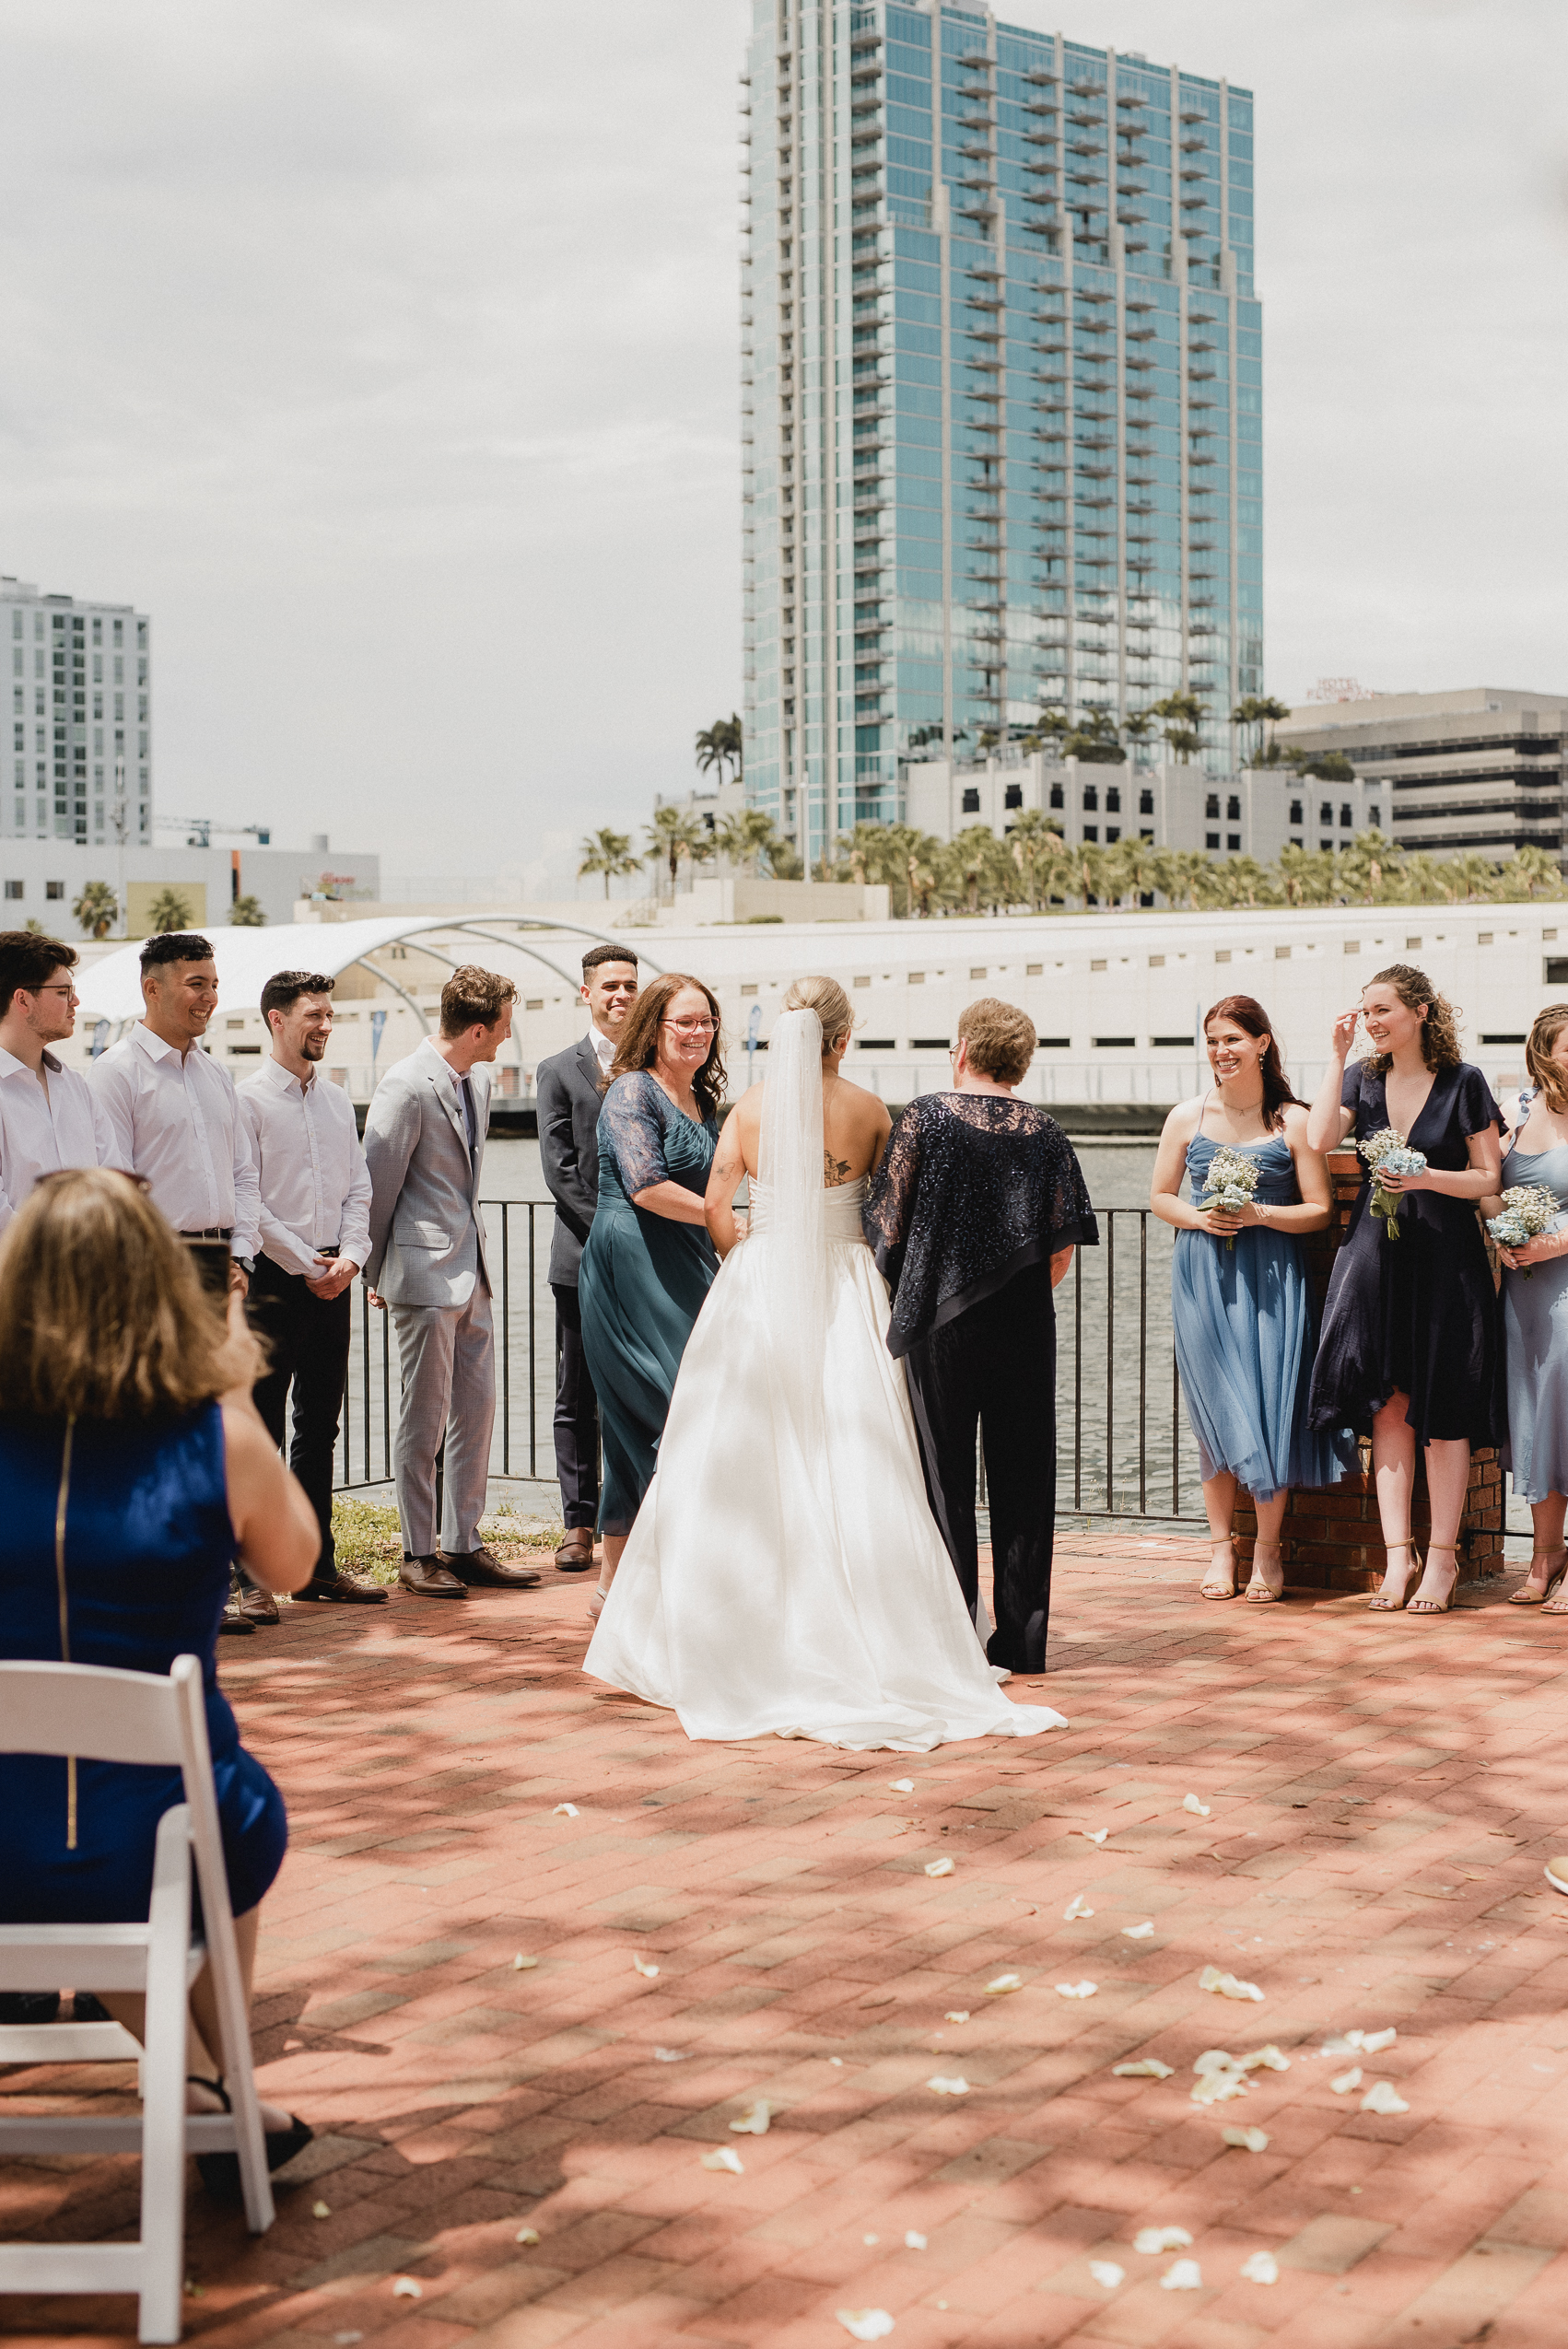 Orlando Tampa Central Florida Elopement Wedding Photographer Photographers